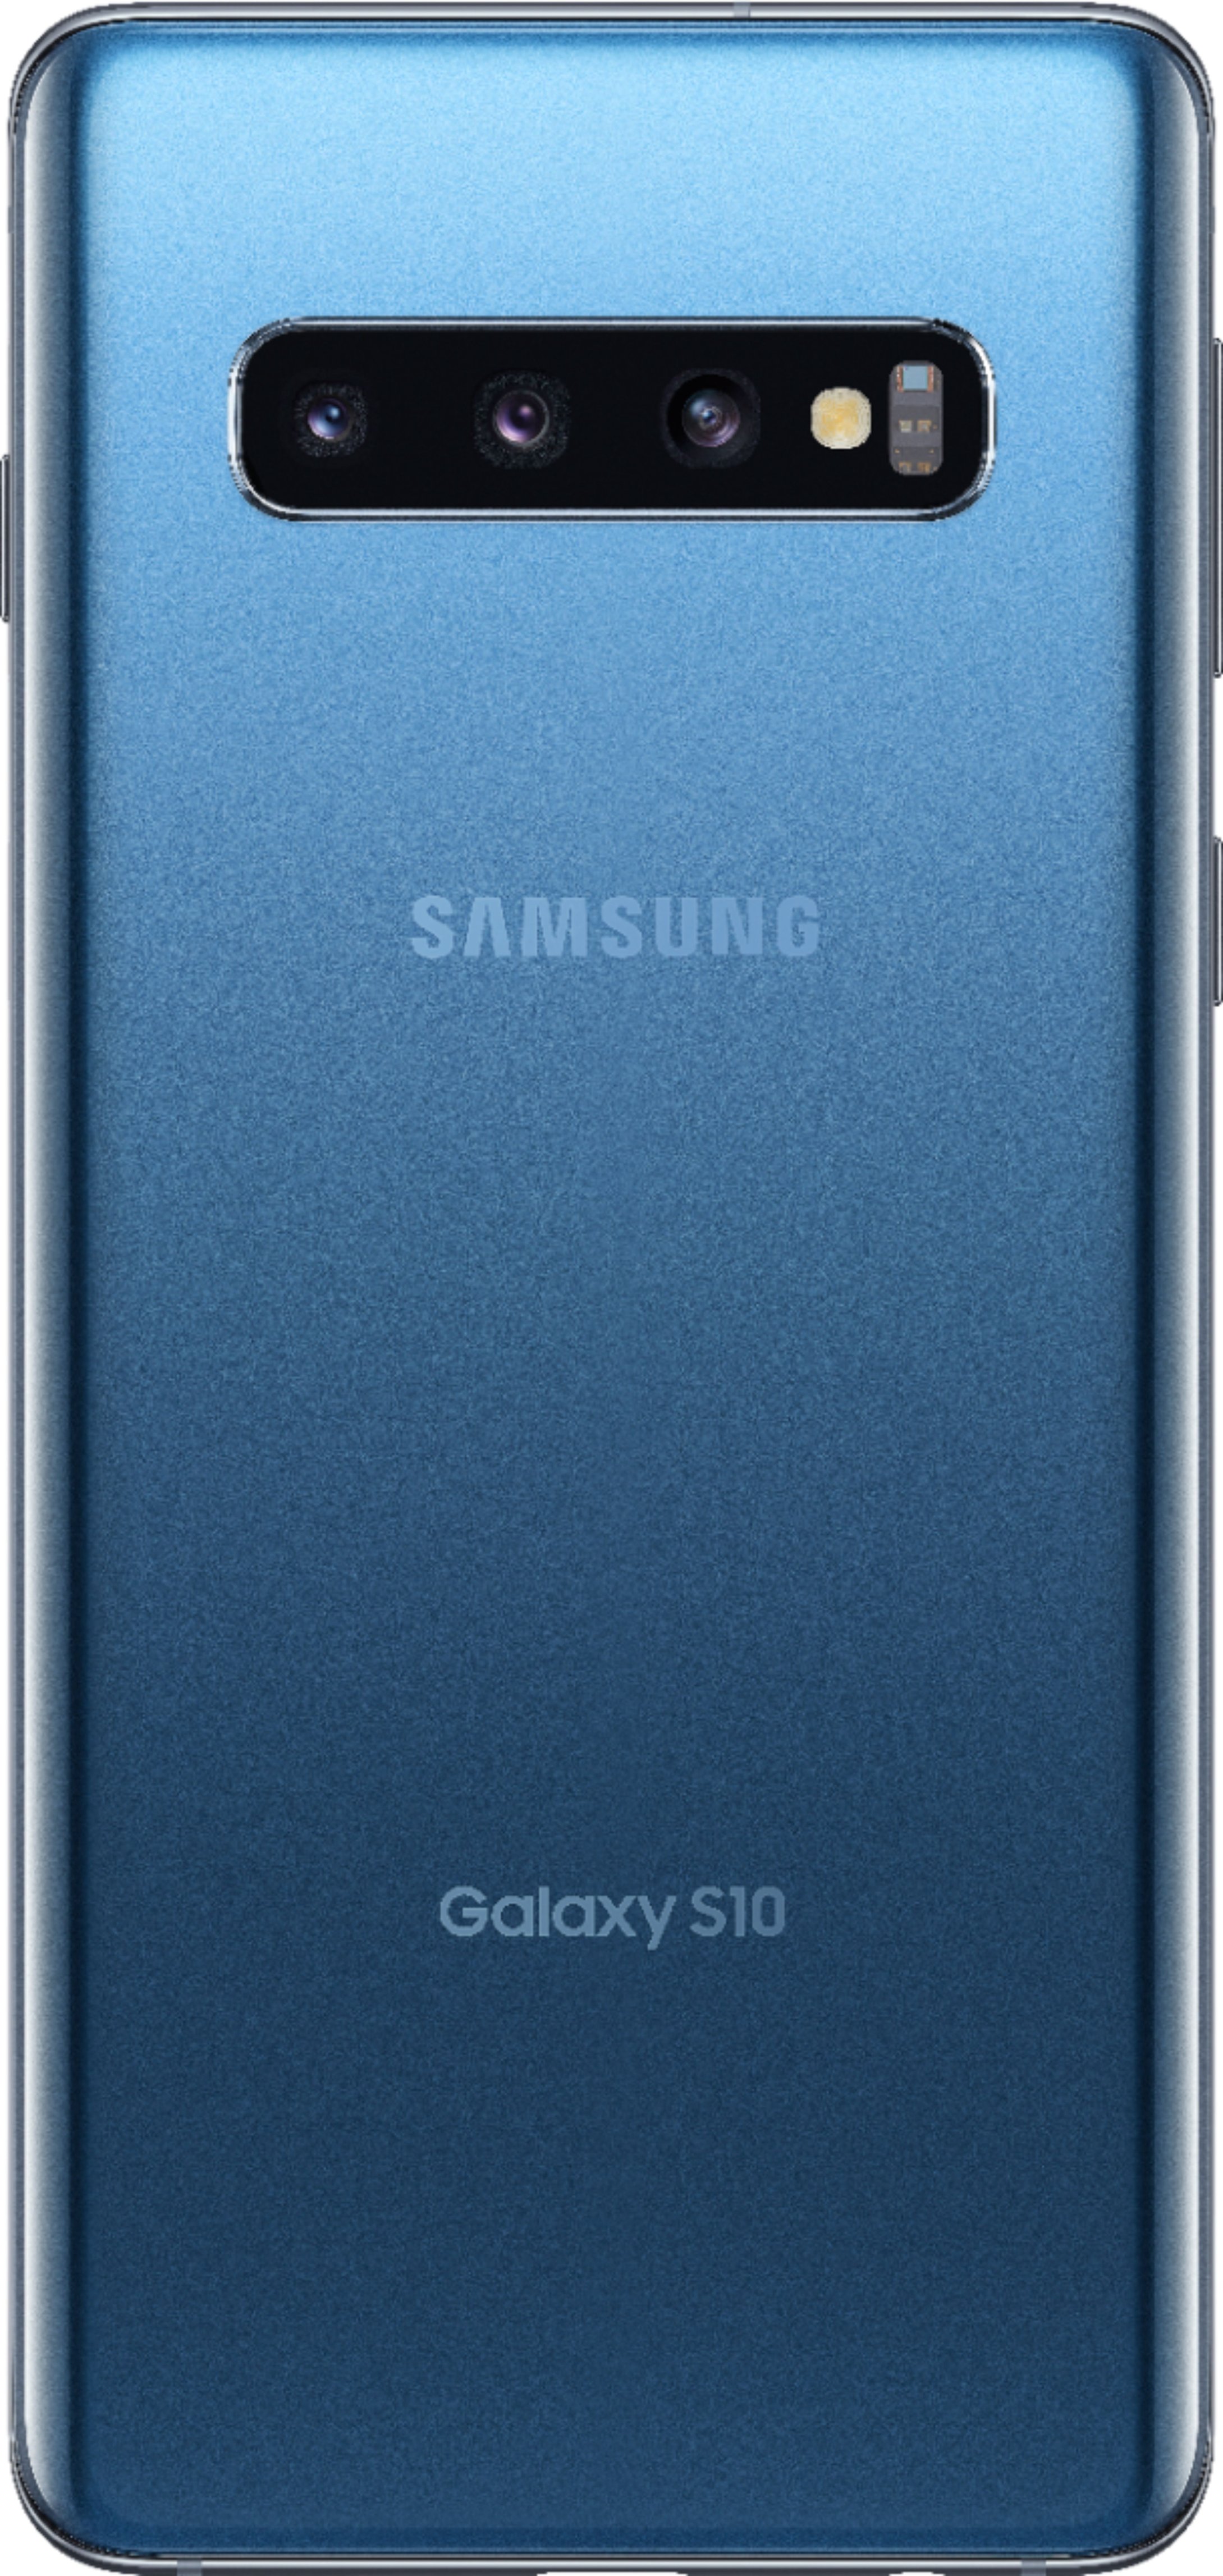 Samsung Galaxy S10 G973 128GB Factory Unlocked Smartphone ATT T-Mobile  Excellent